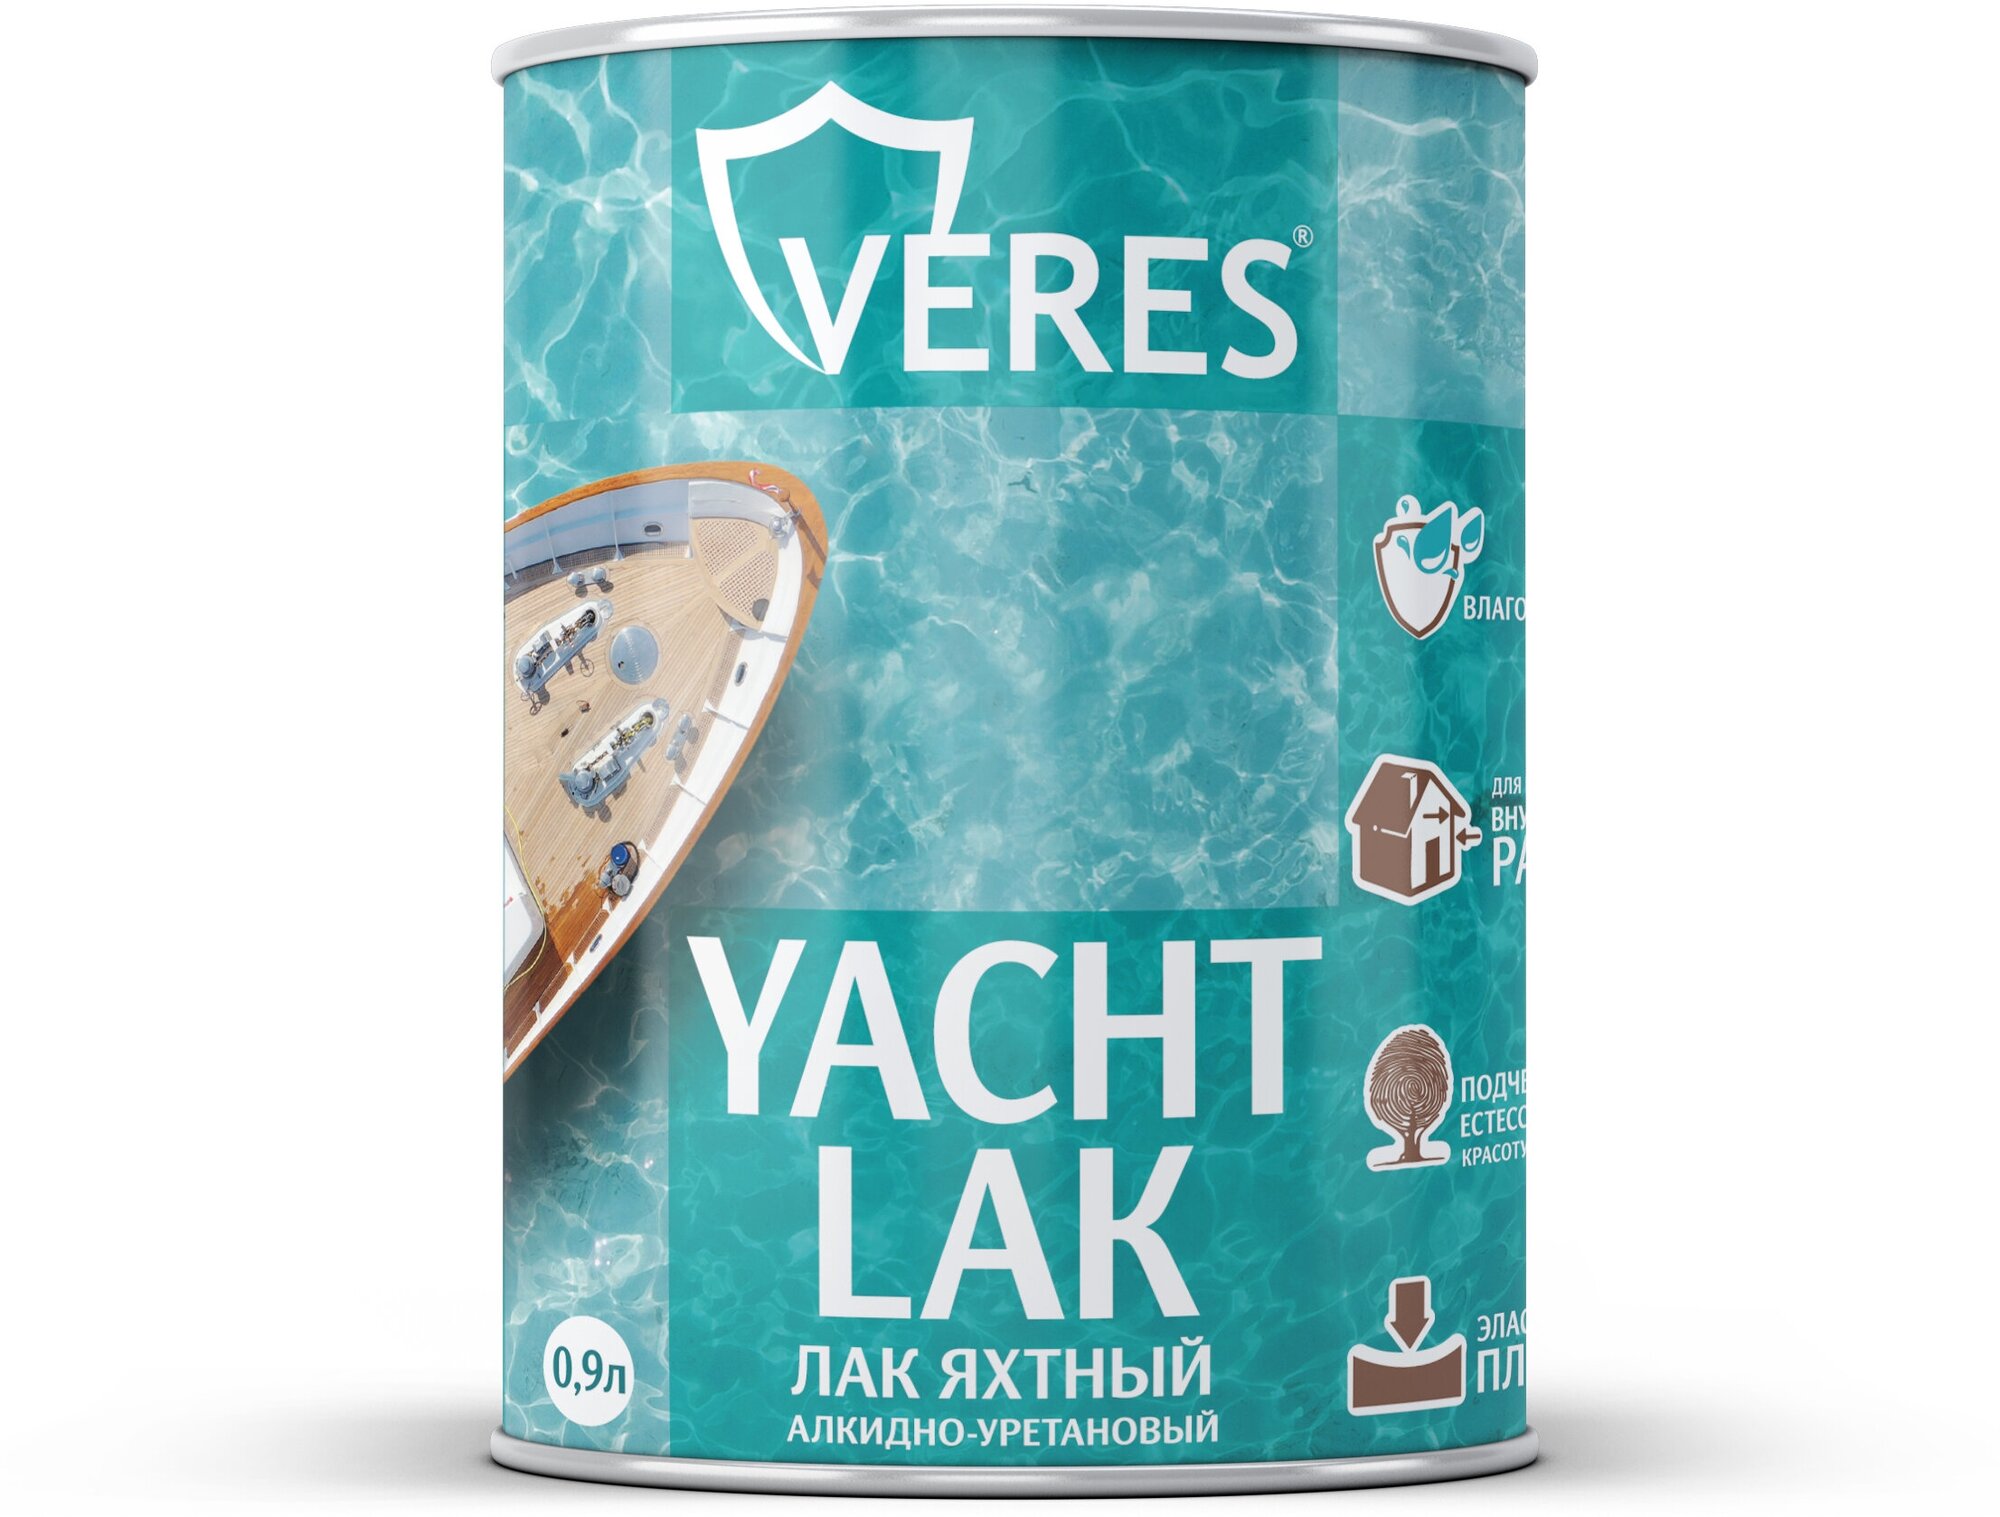 Лак яхтный Veres, алкидно-уретановый, глянцевый, 0,9 л